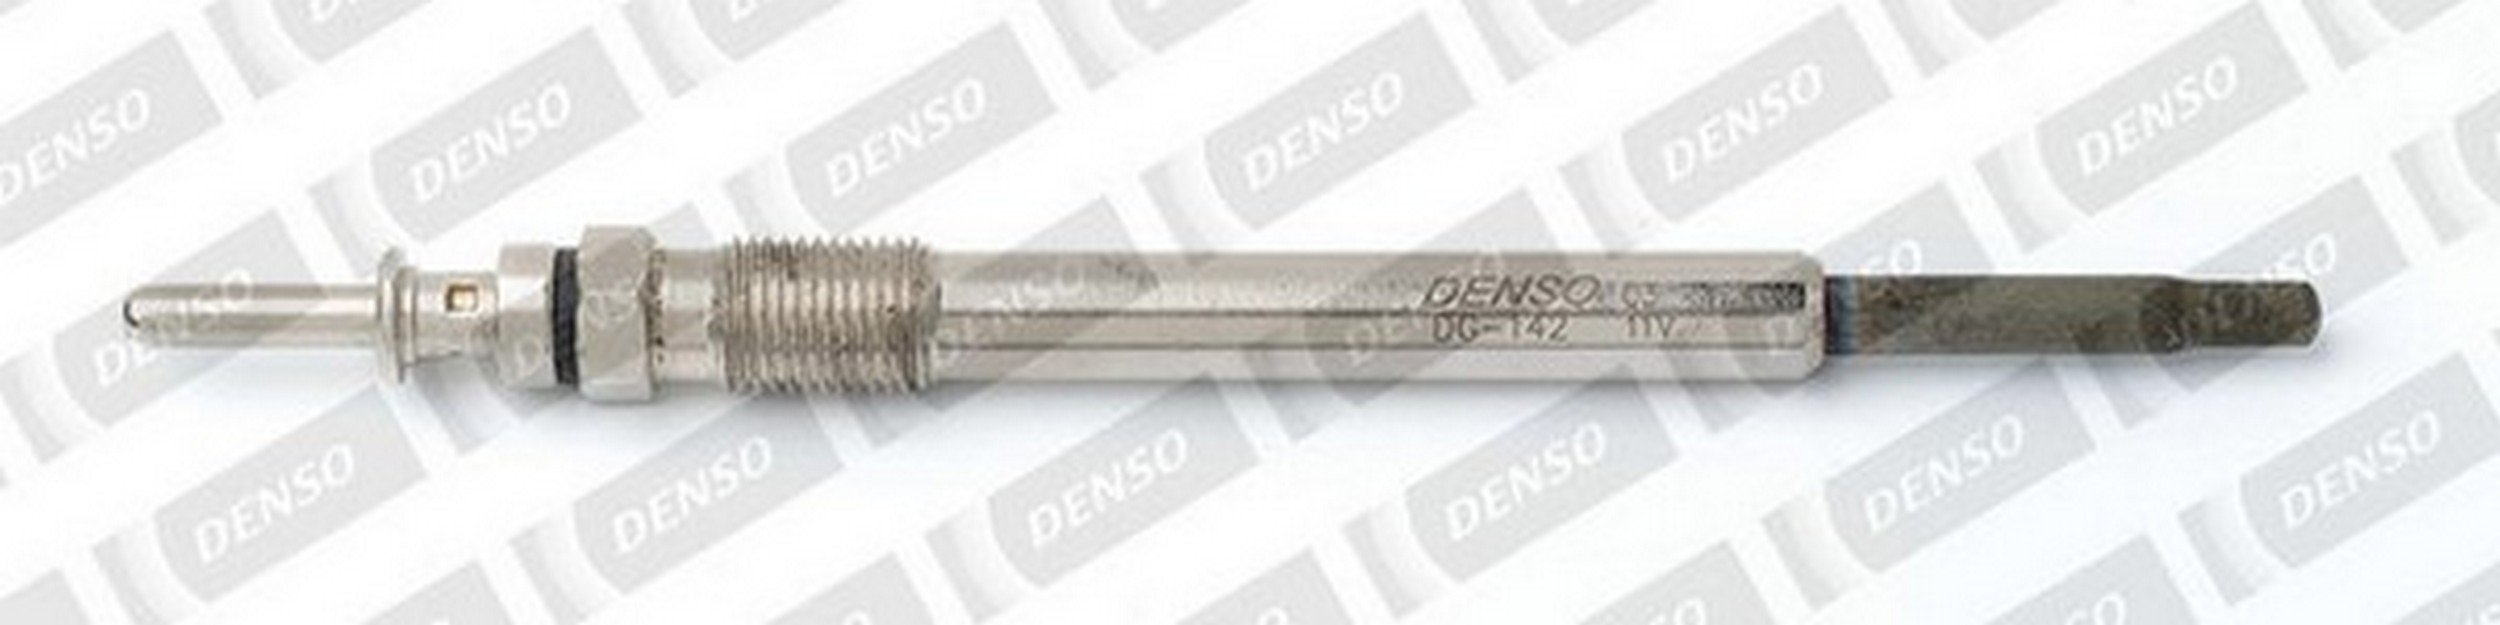 DENSO-AU DG-142